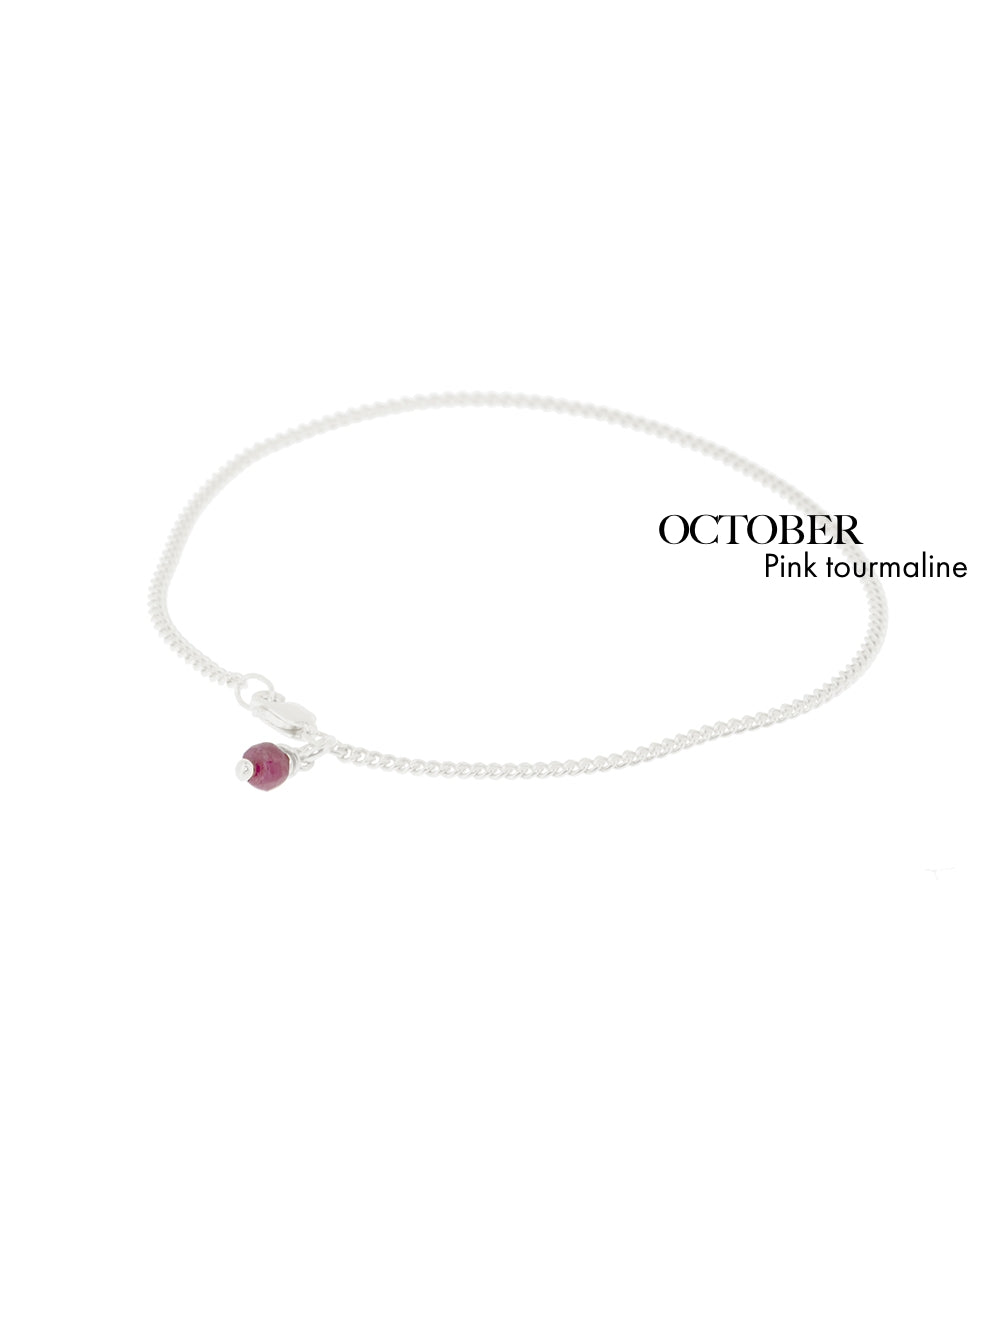 Birthstone October - Pink Tourmaline | 925 Sterling Silver